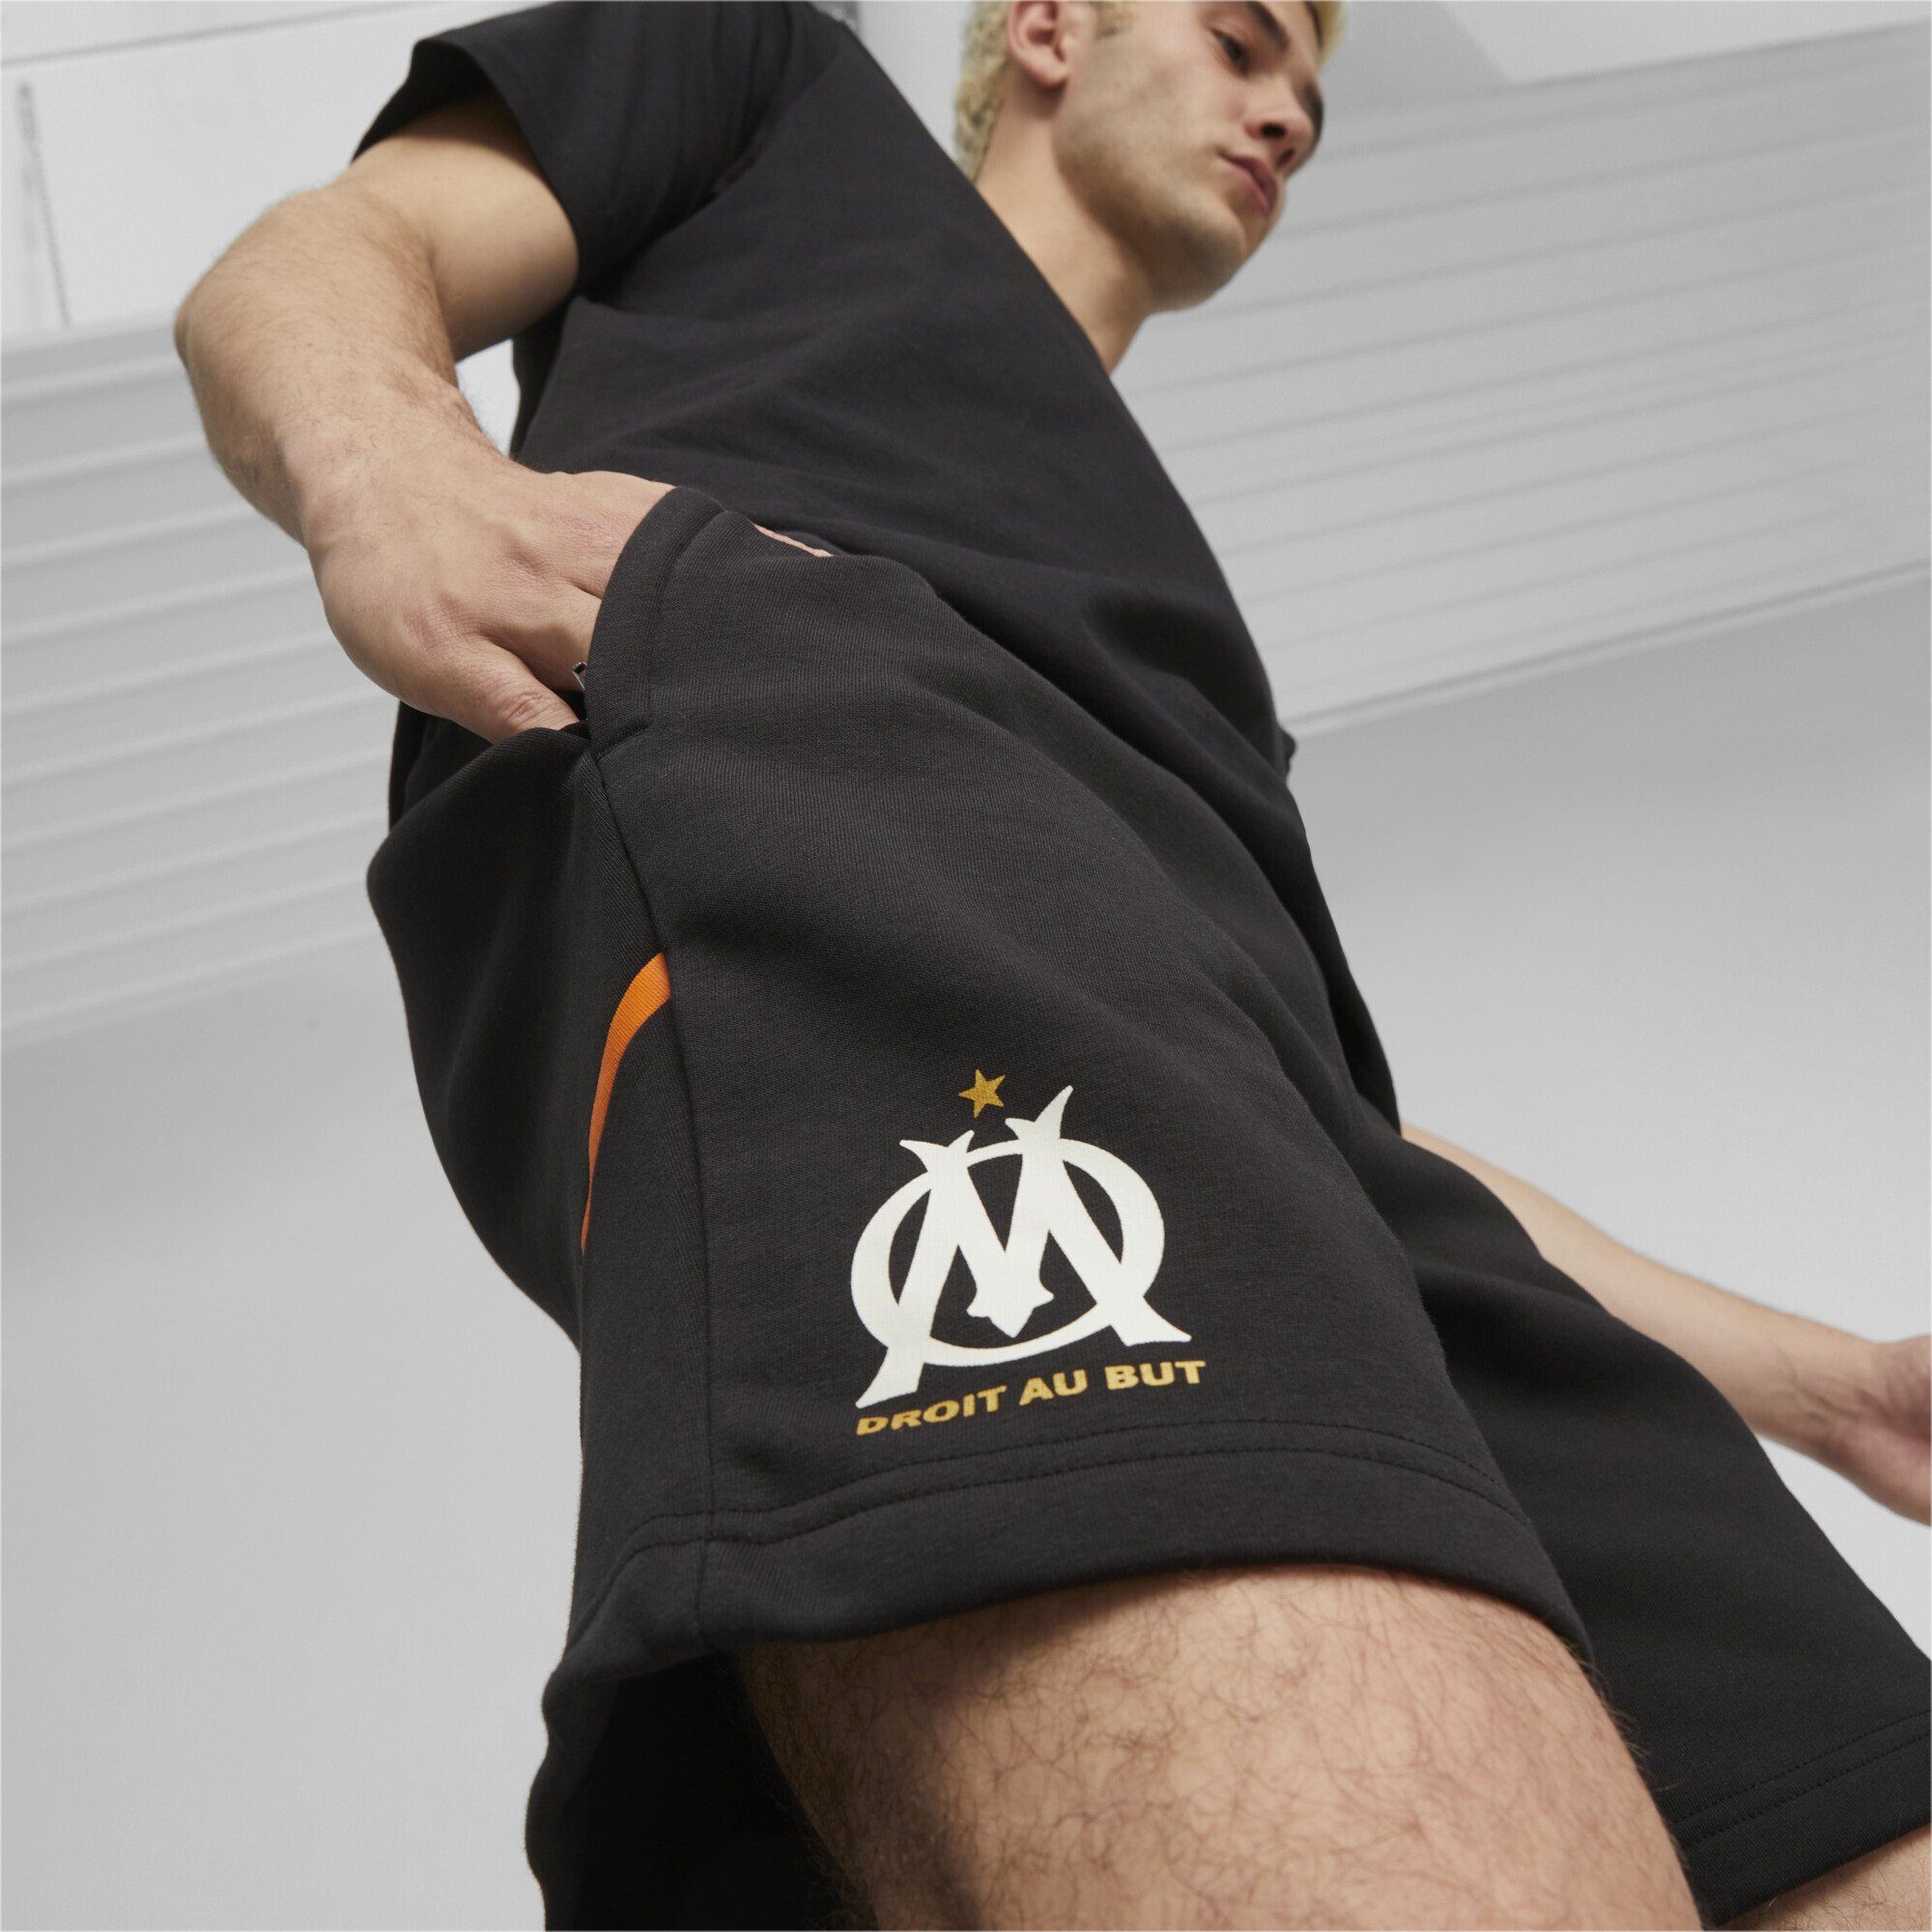 Black Orange Sporthose Football Herren PUMA Marseille Shorts de Olympique Casuals Rickie